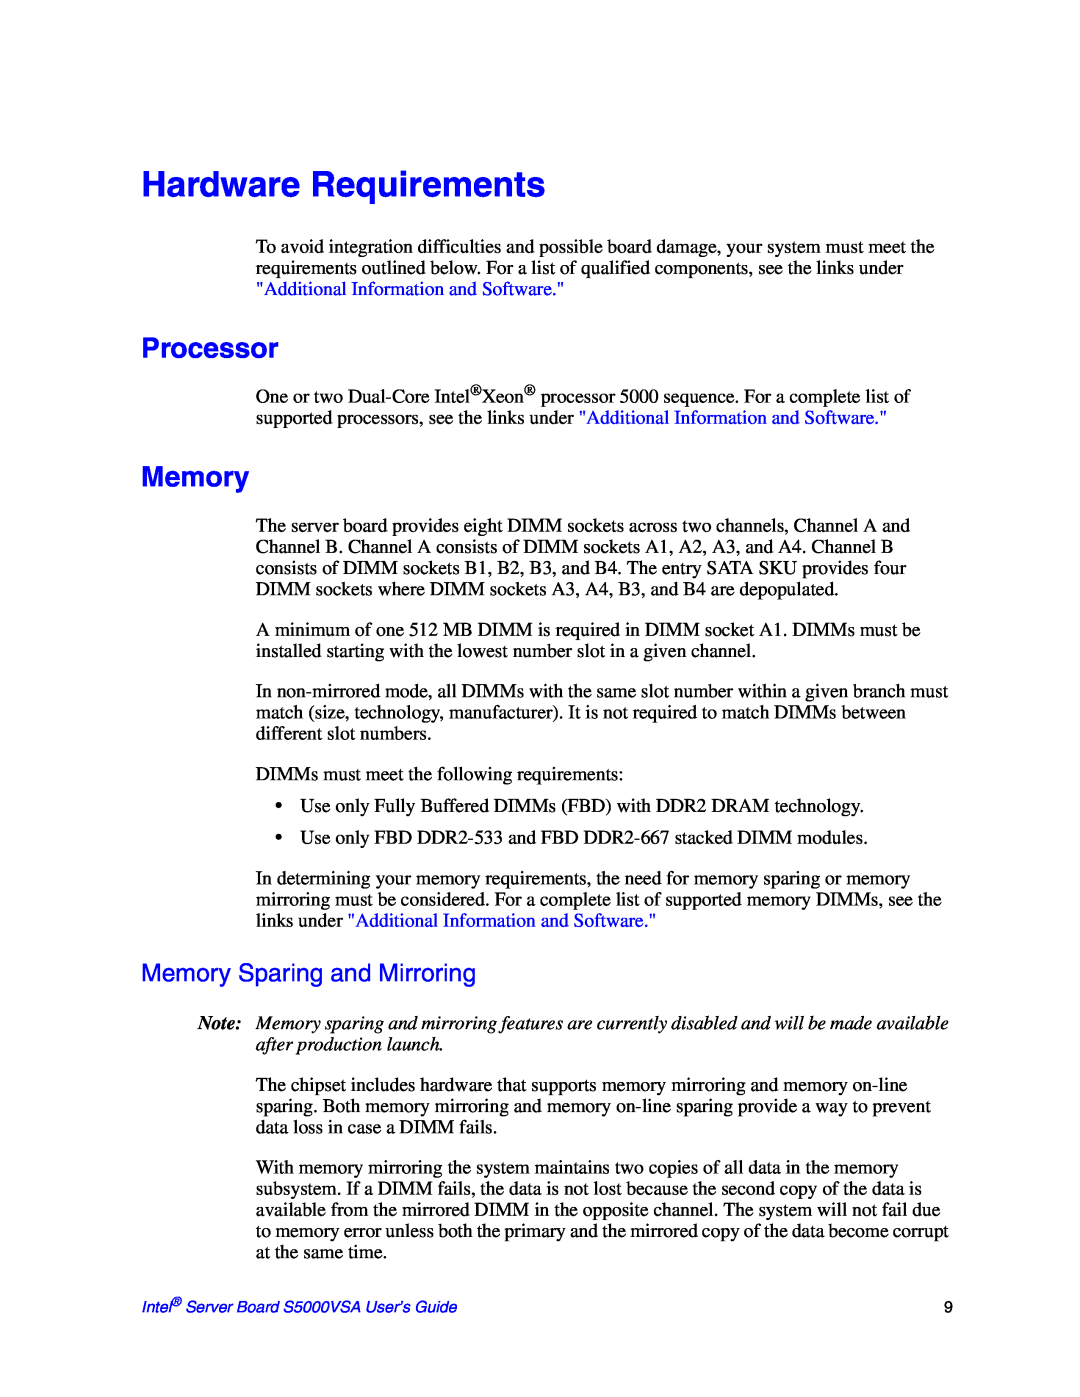 Intel S5000VSA manual Hardware Requirements, Processor, Memory Sparing and Mirroring 